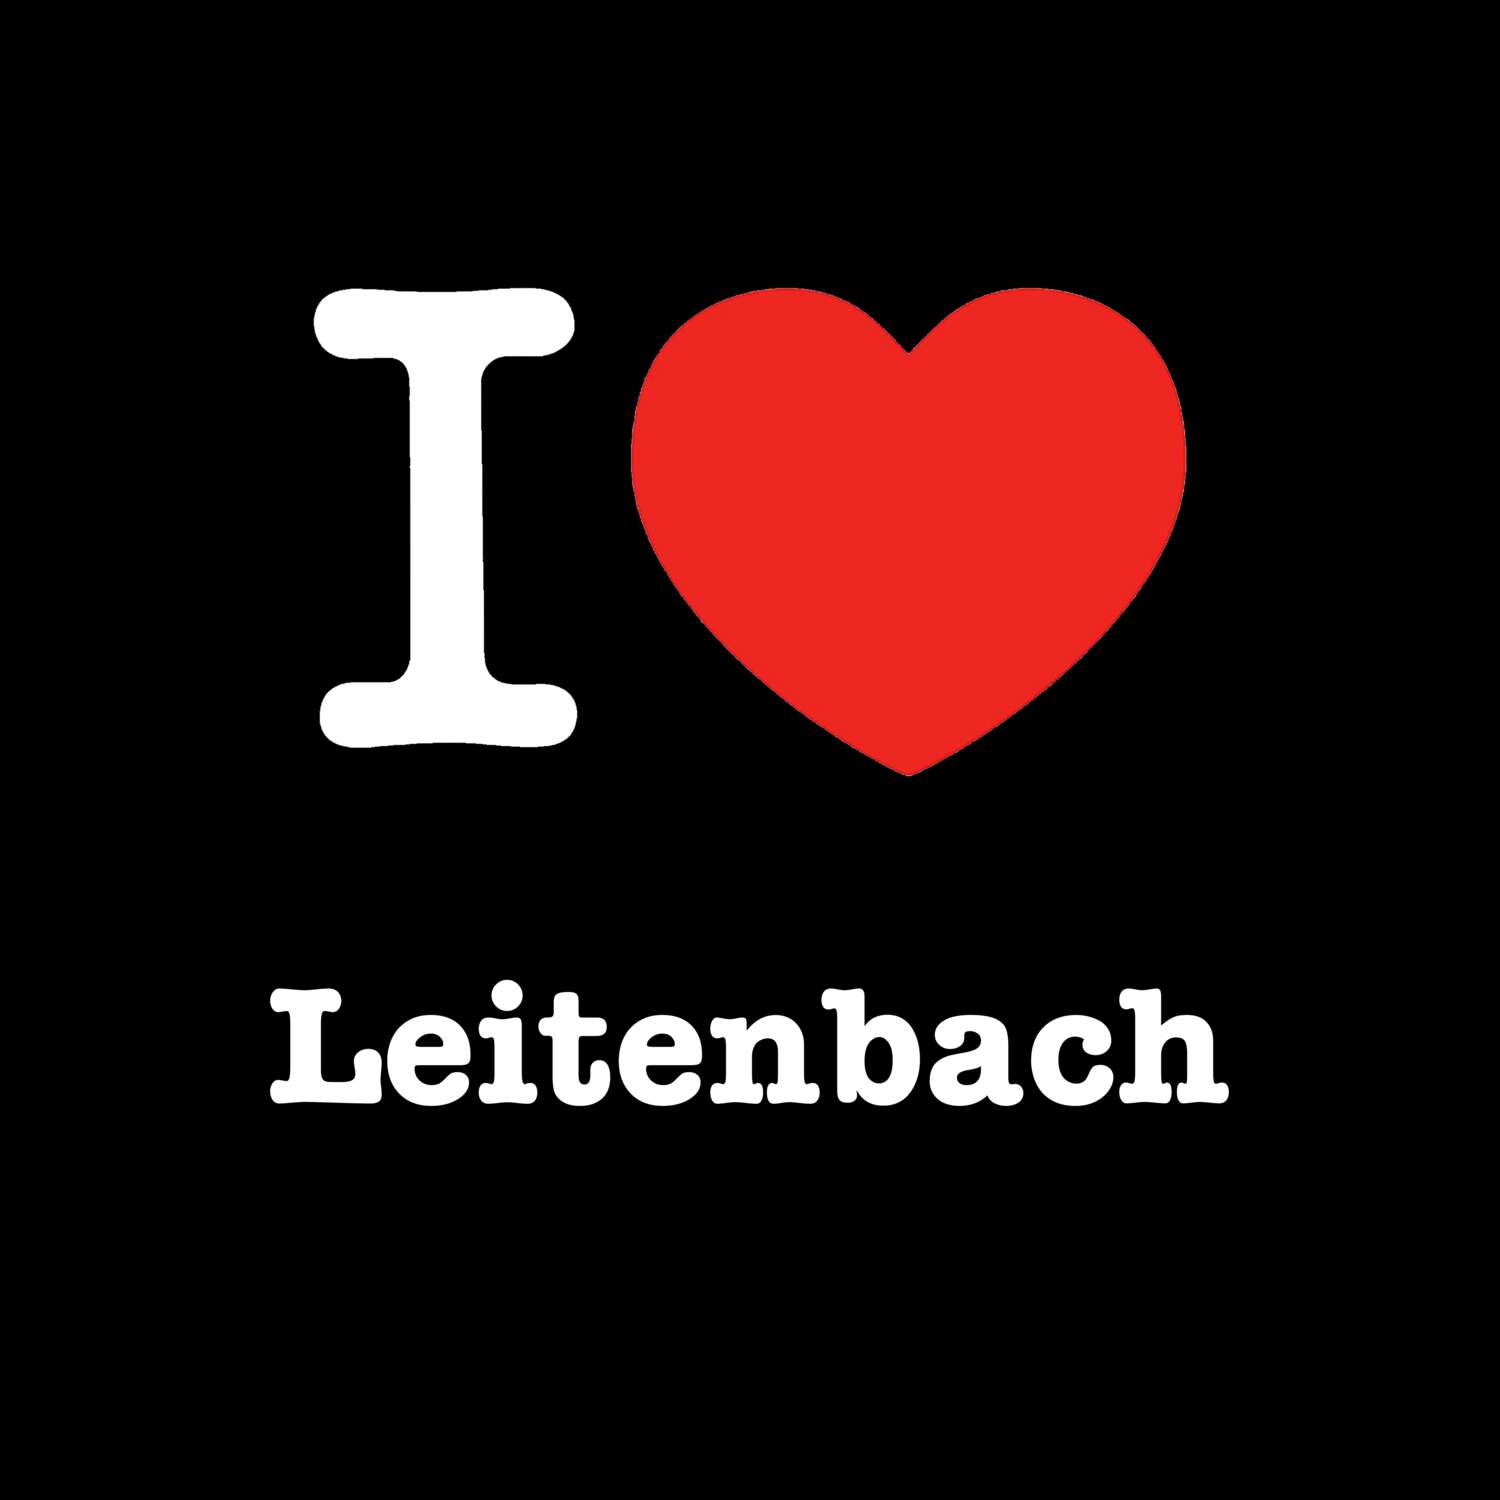 Leitenbach T-Shirt »I love«